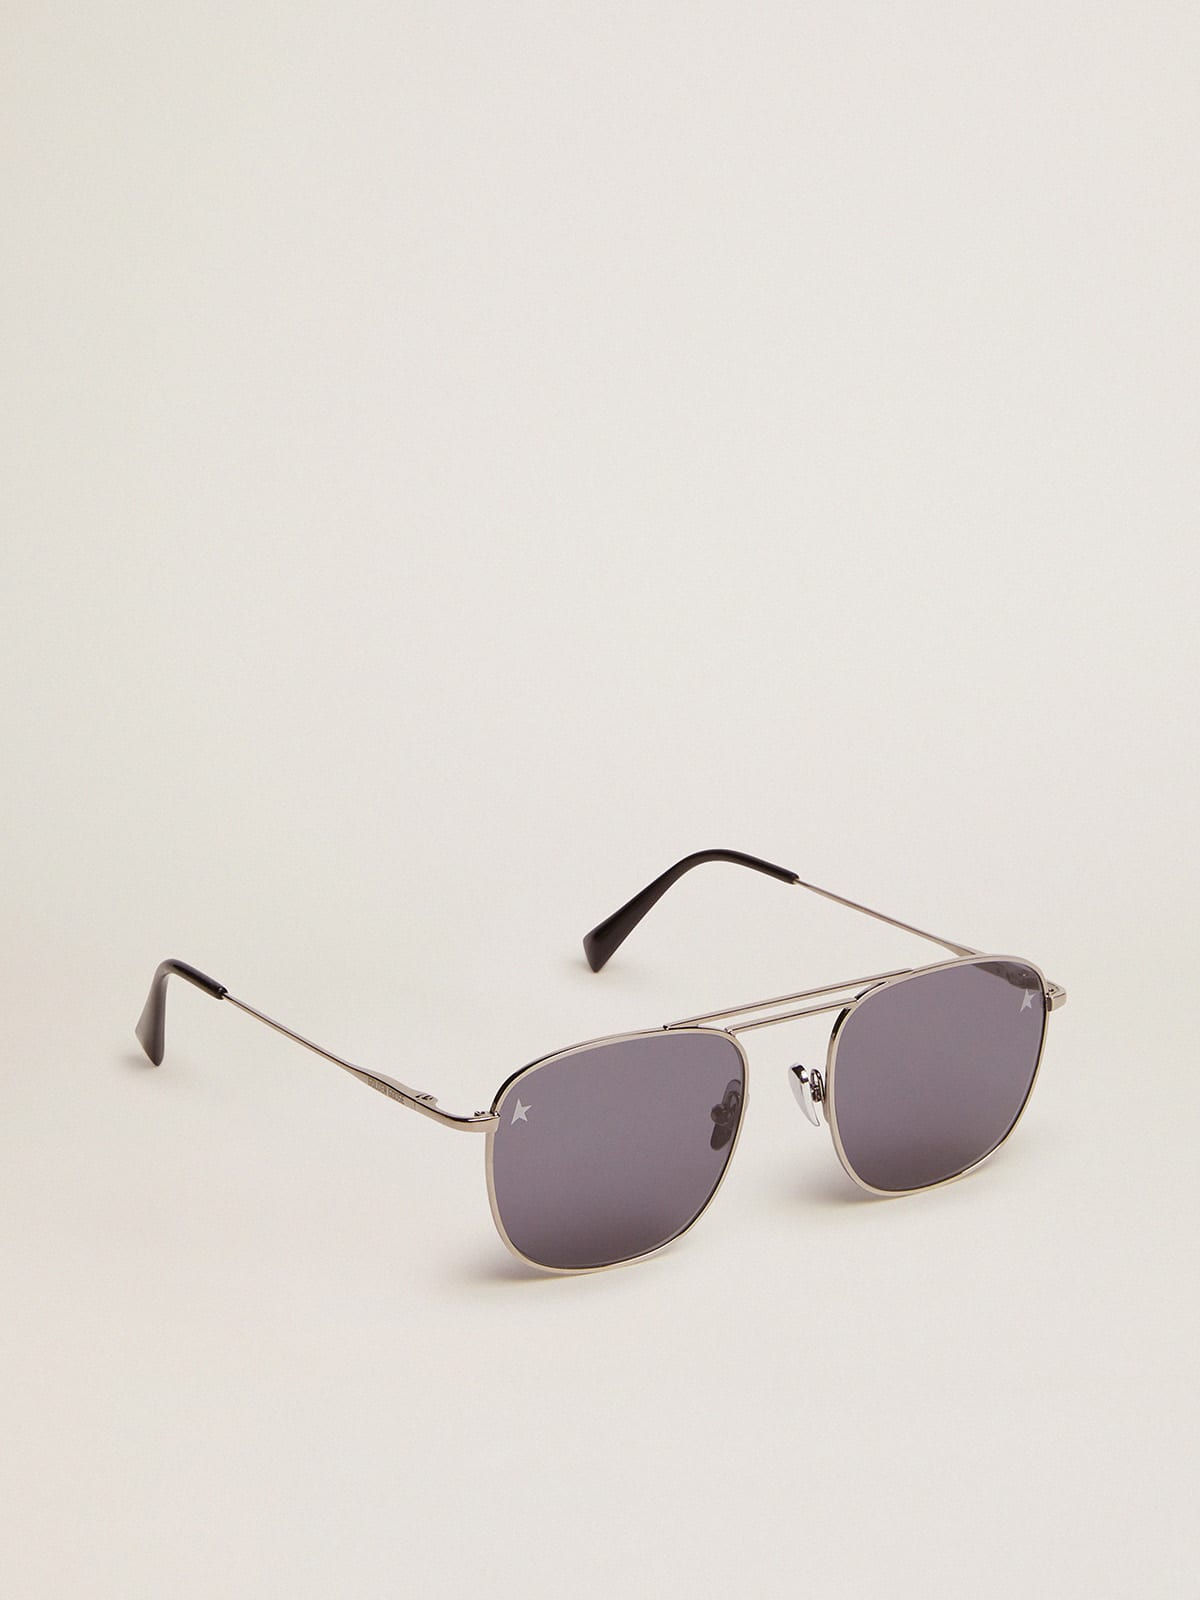 Golden Goose - Roger aviator sunglasses with black frame and black lenses in 